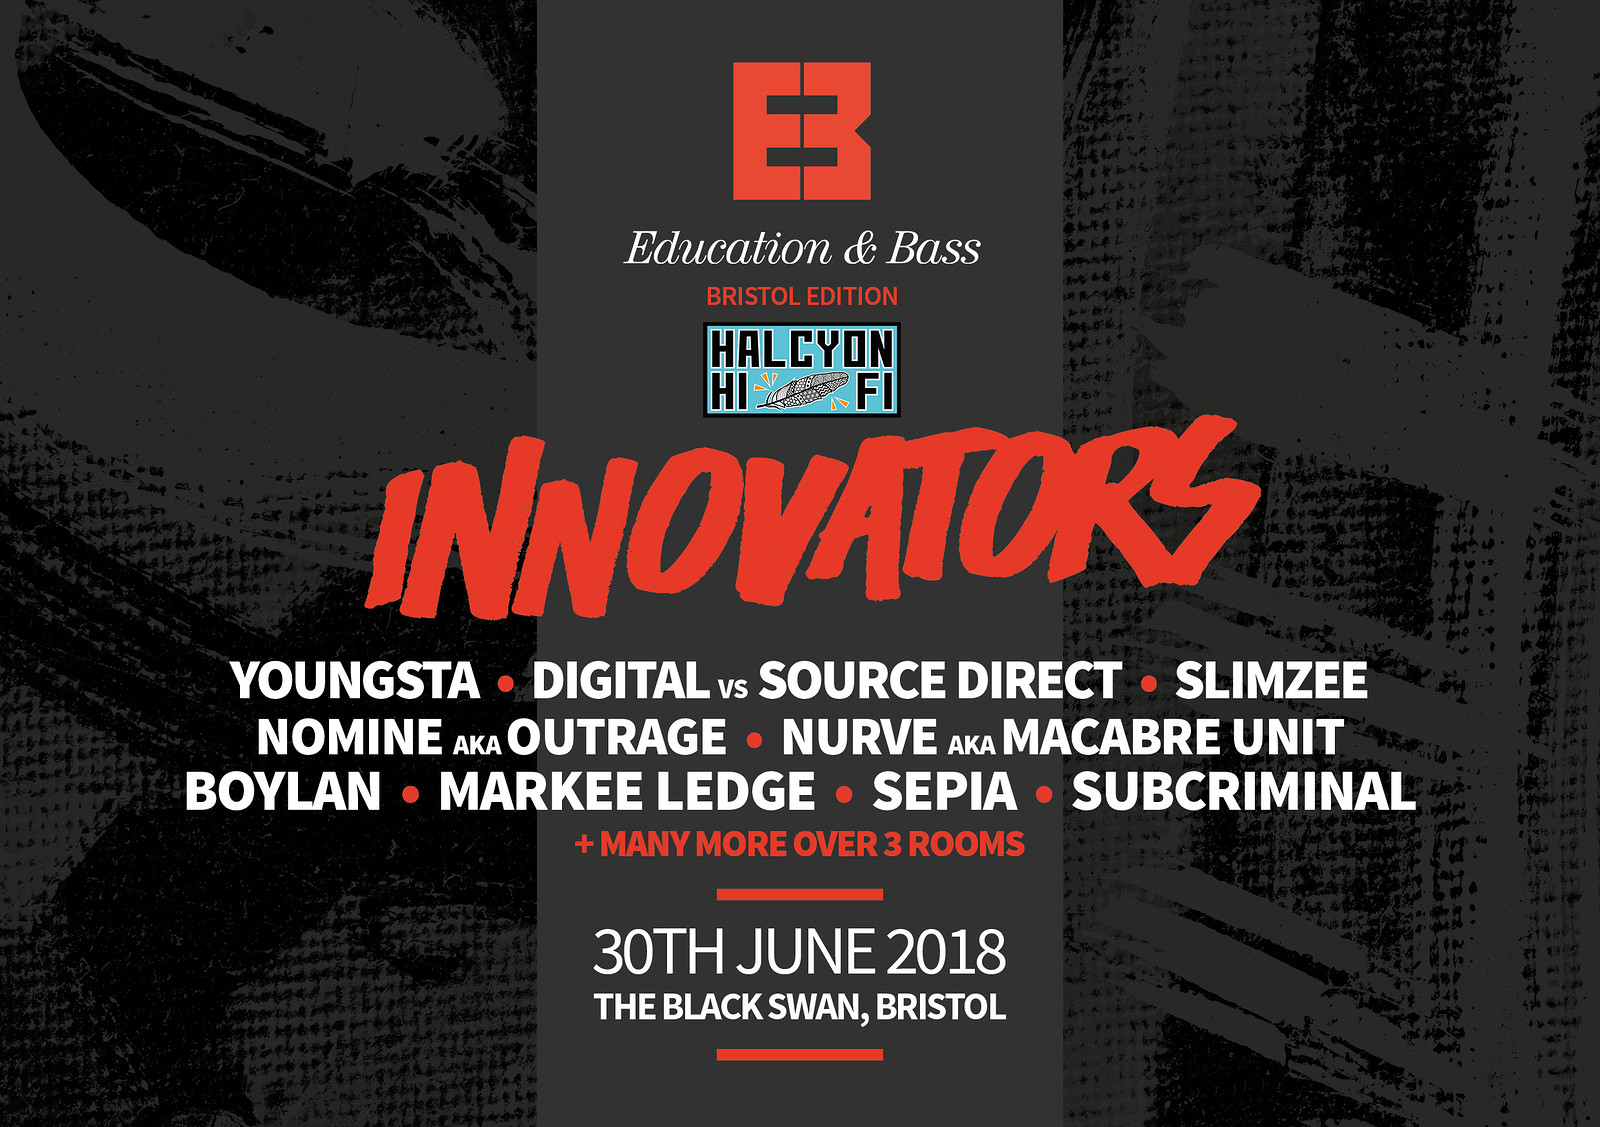 Education & Bass Innovators at The Black Swan